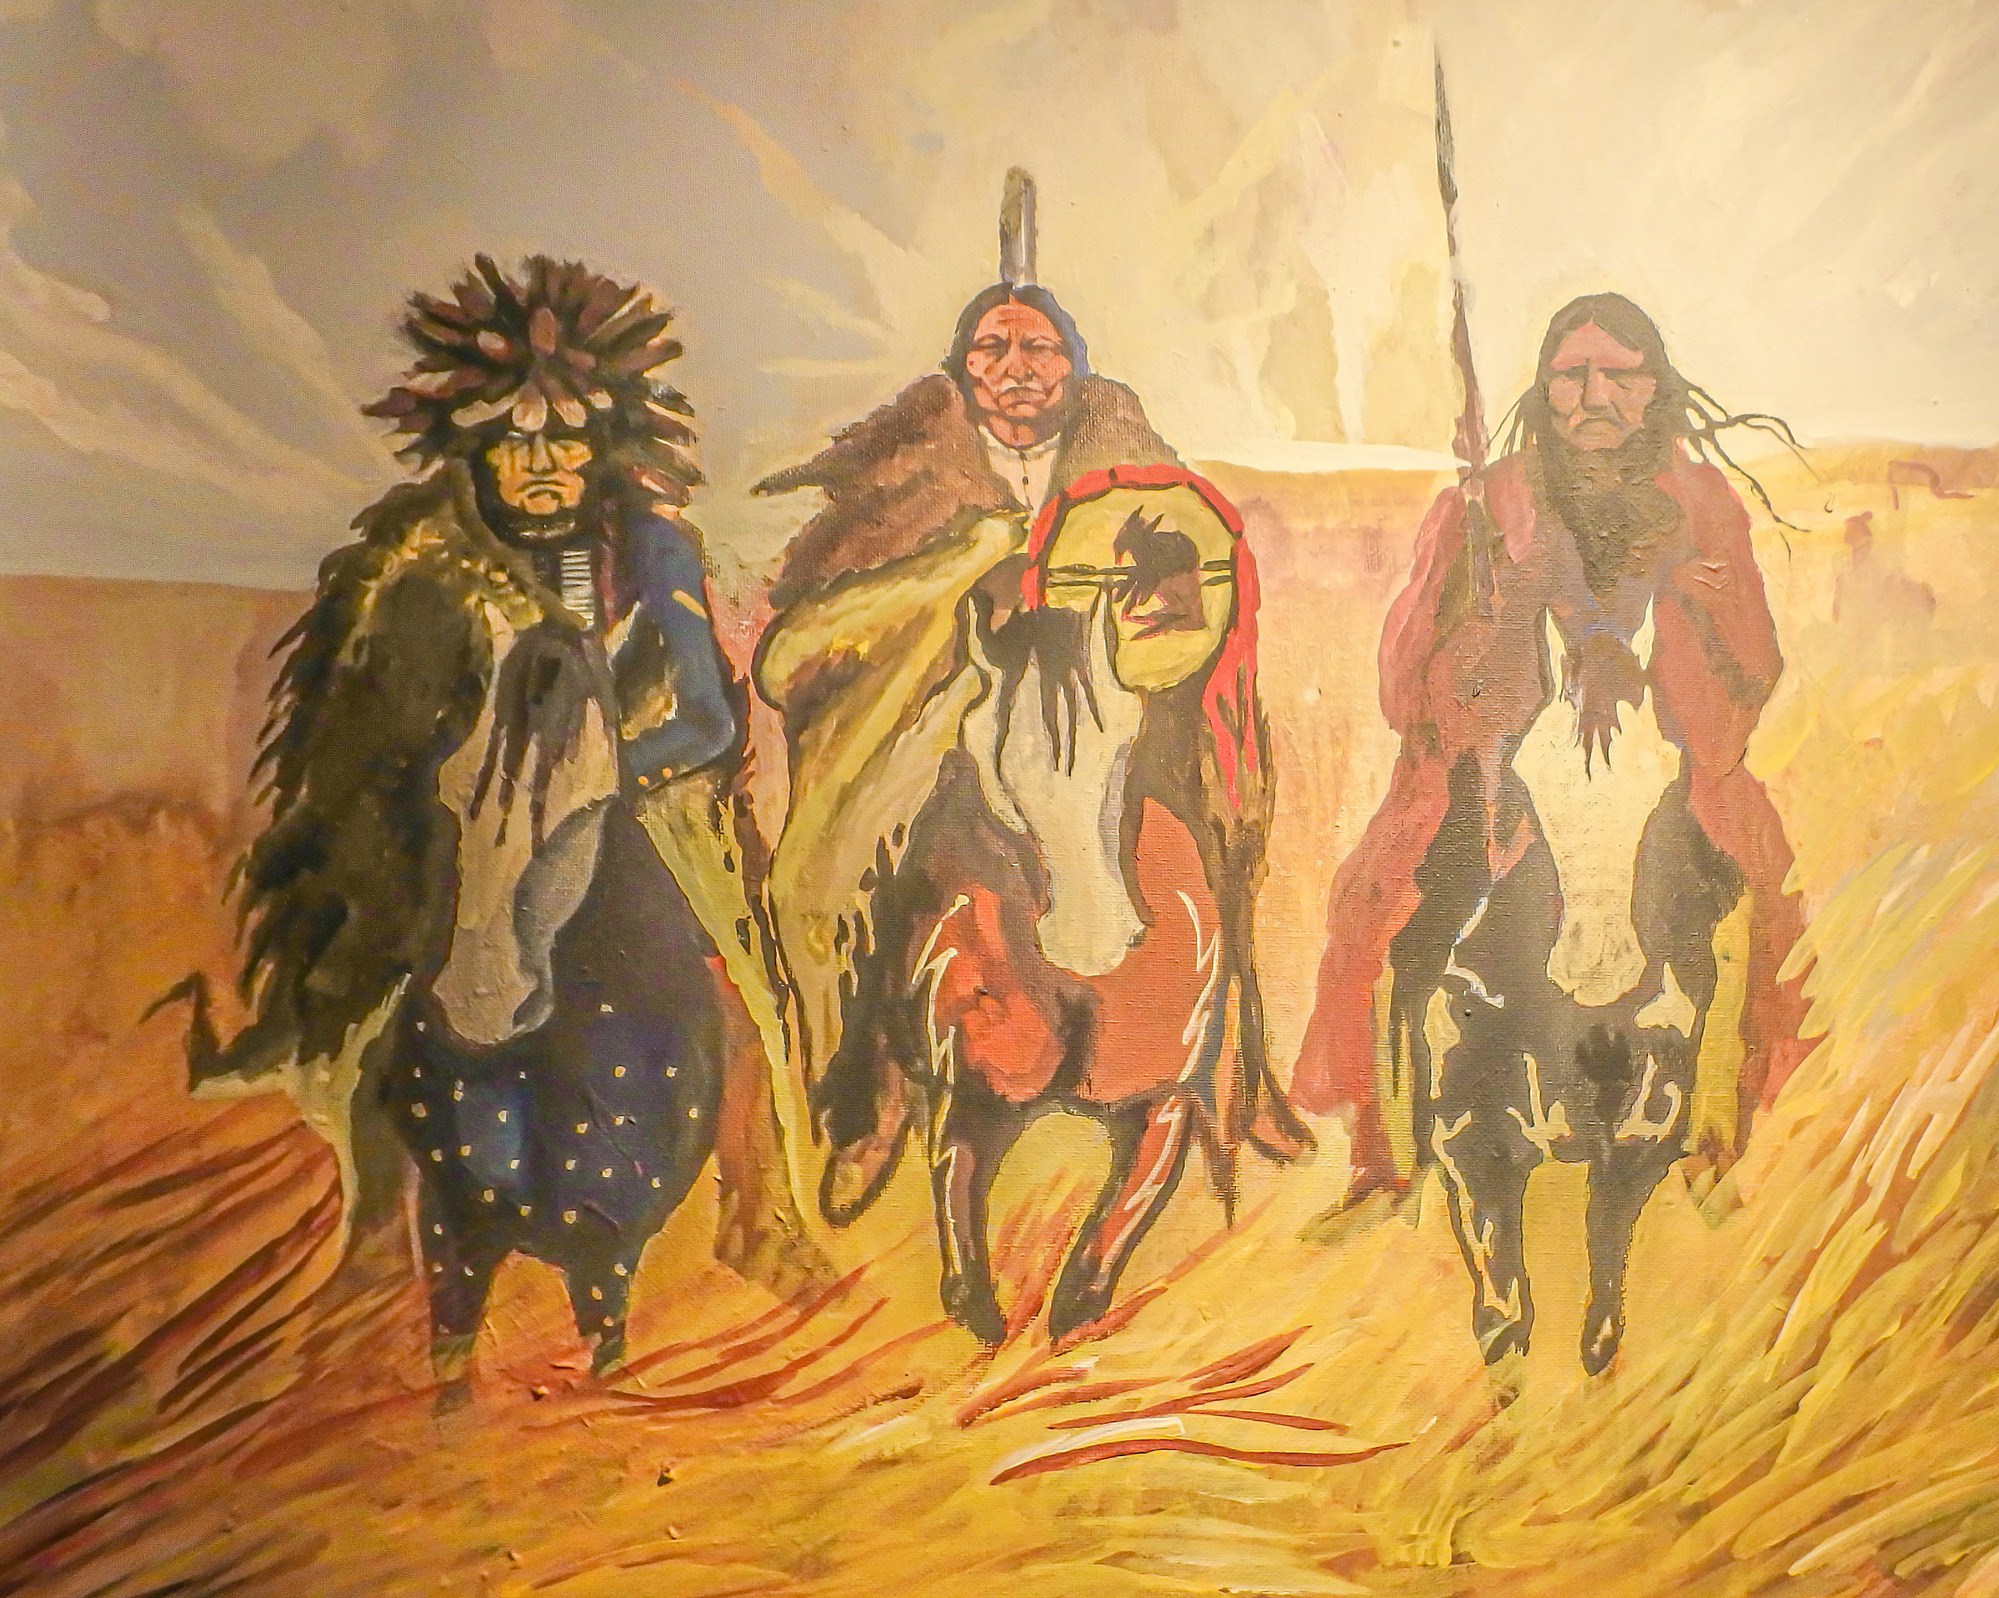 native american art